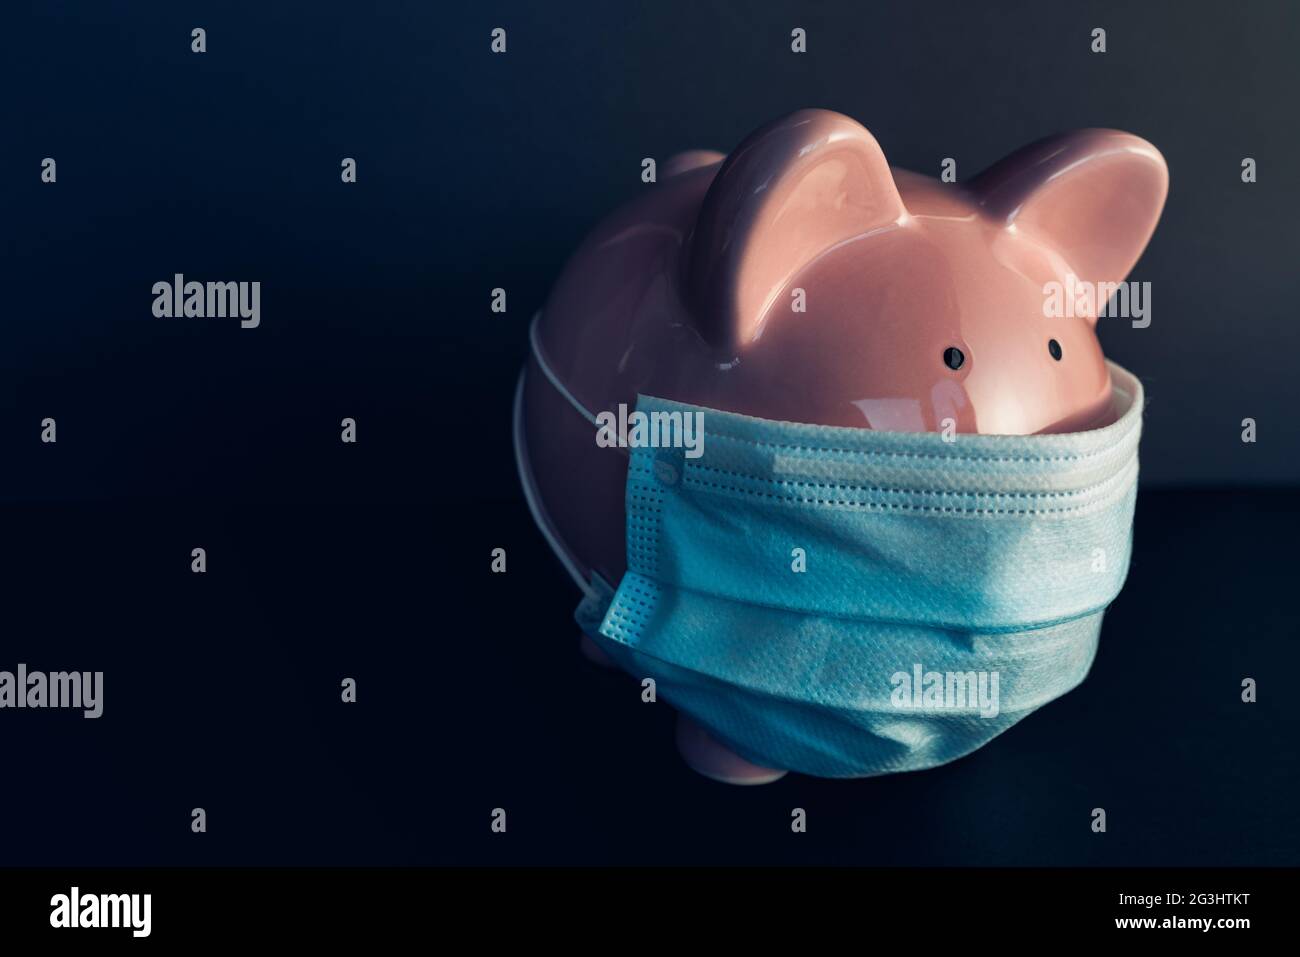 Global economy during coronavirus pandemic. Piggy bank wearing surgical face mask. Financial crisis, banking concept. Stock Photo